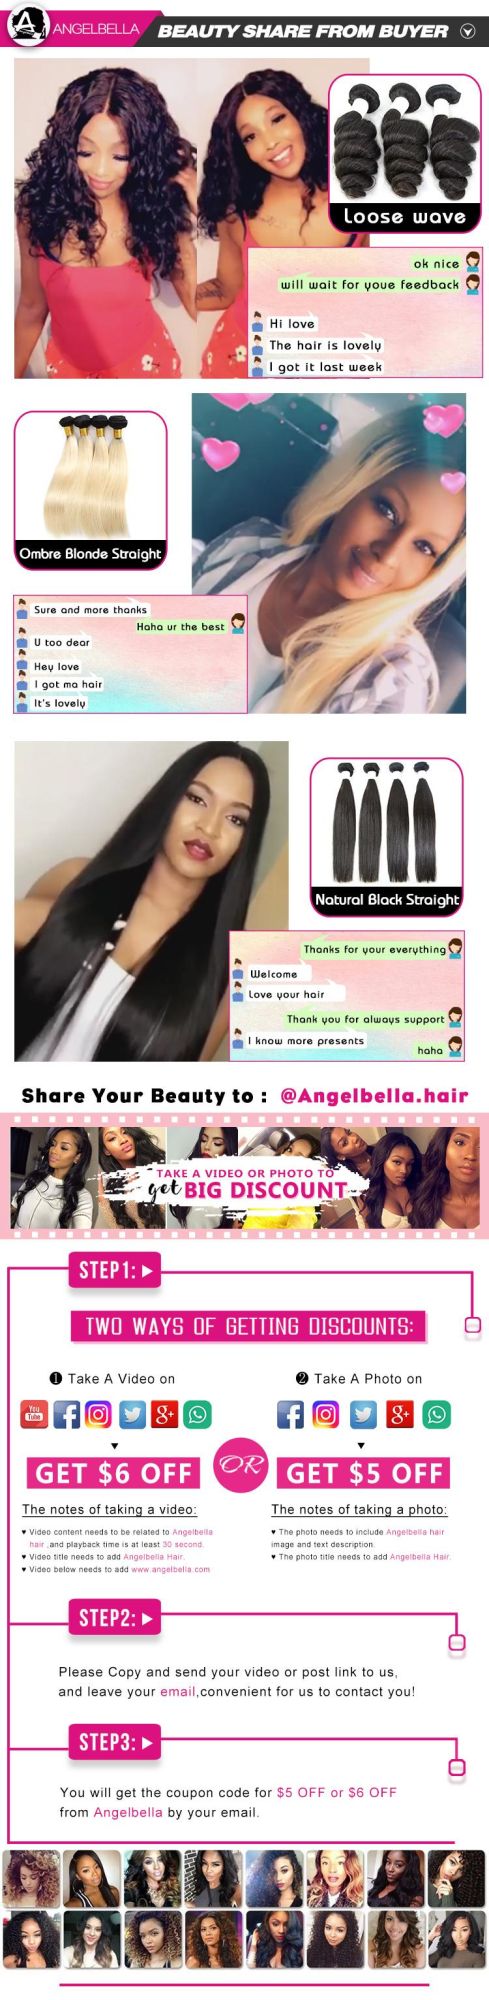 Angelbella Wholesale Price Mink Remy Hair Brazilian 1b#-Red Hair Bundles